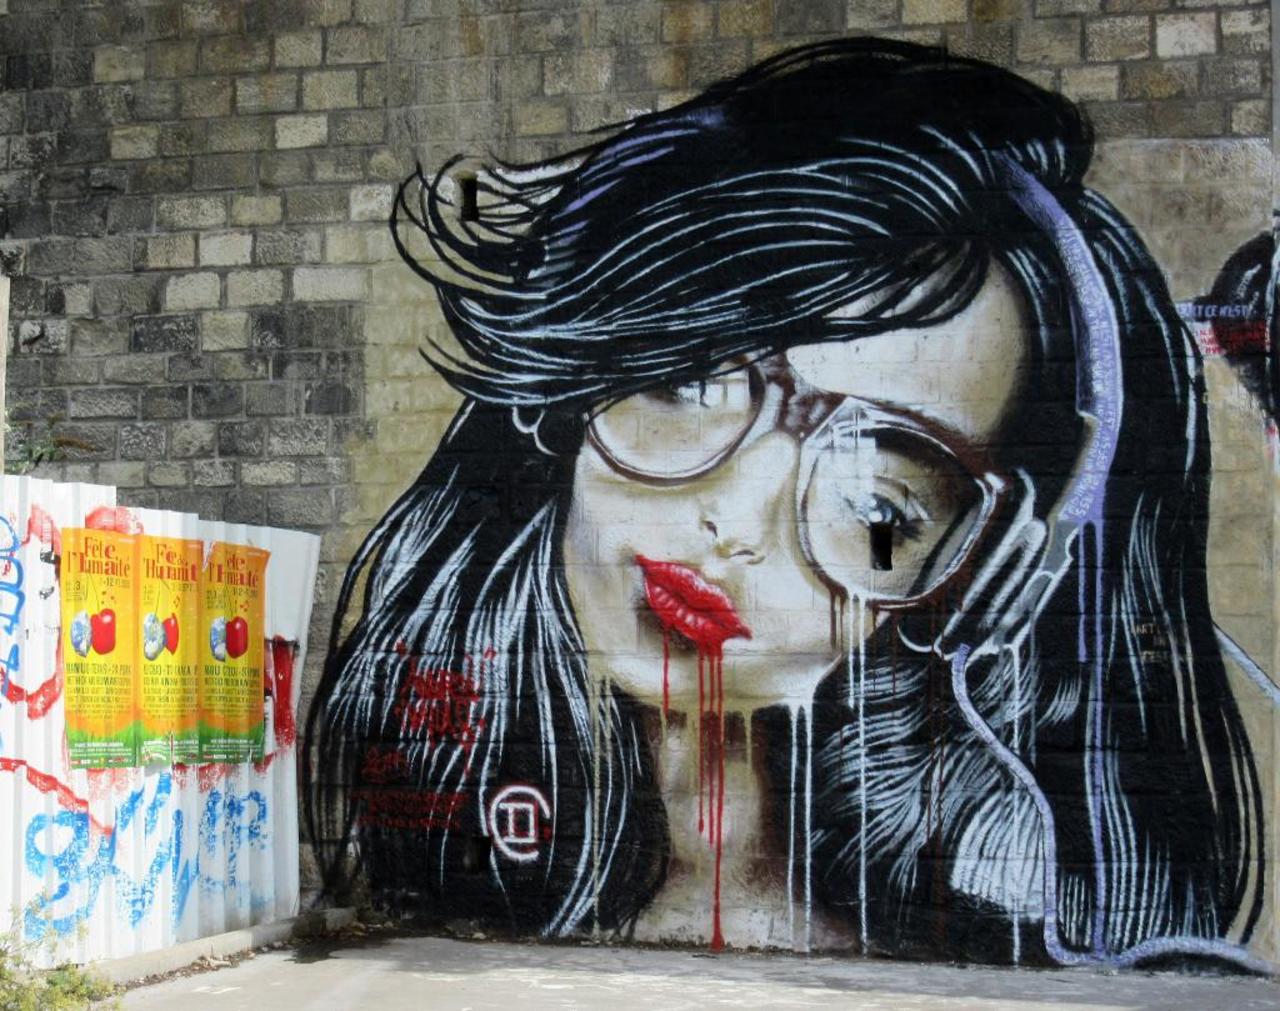 #streetartist Kristx #streetart #graffiti #urbanart #mural #spraypaint #graffitiart #urbanenergy http://t.co/JqcqIy0v4K